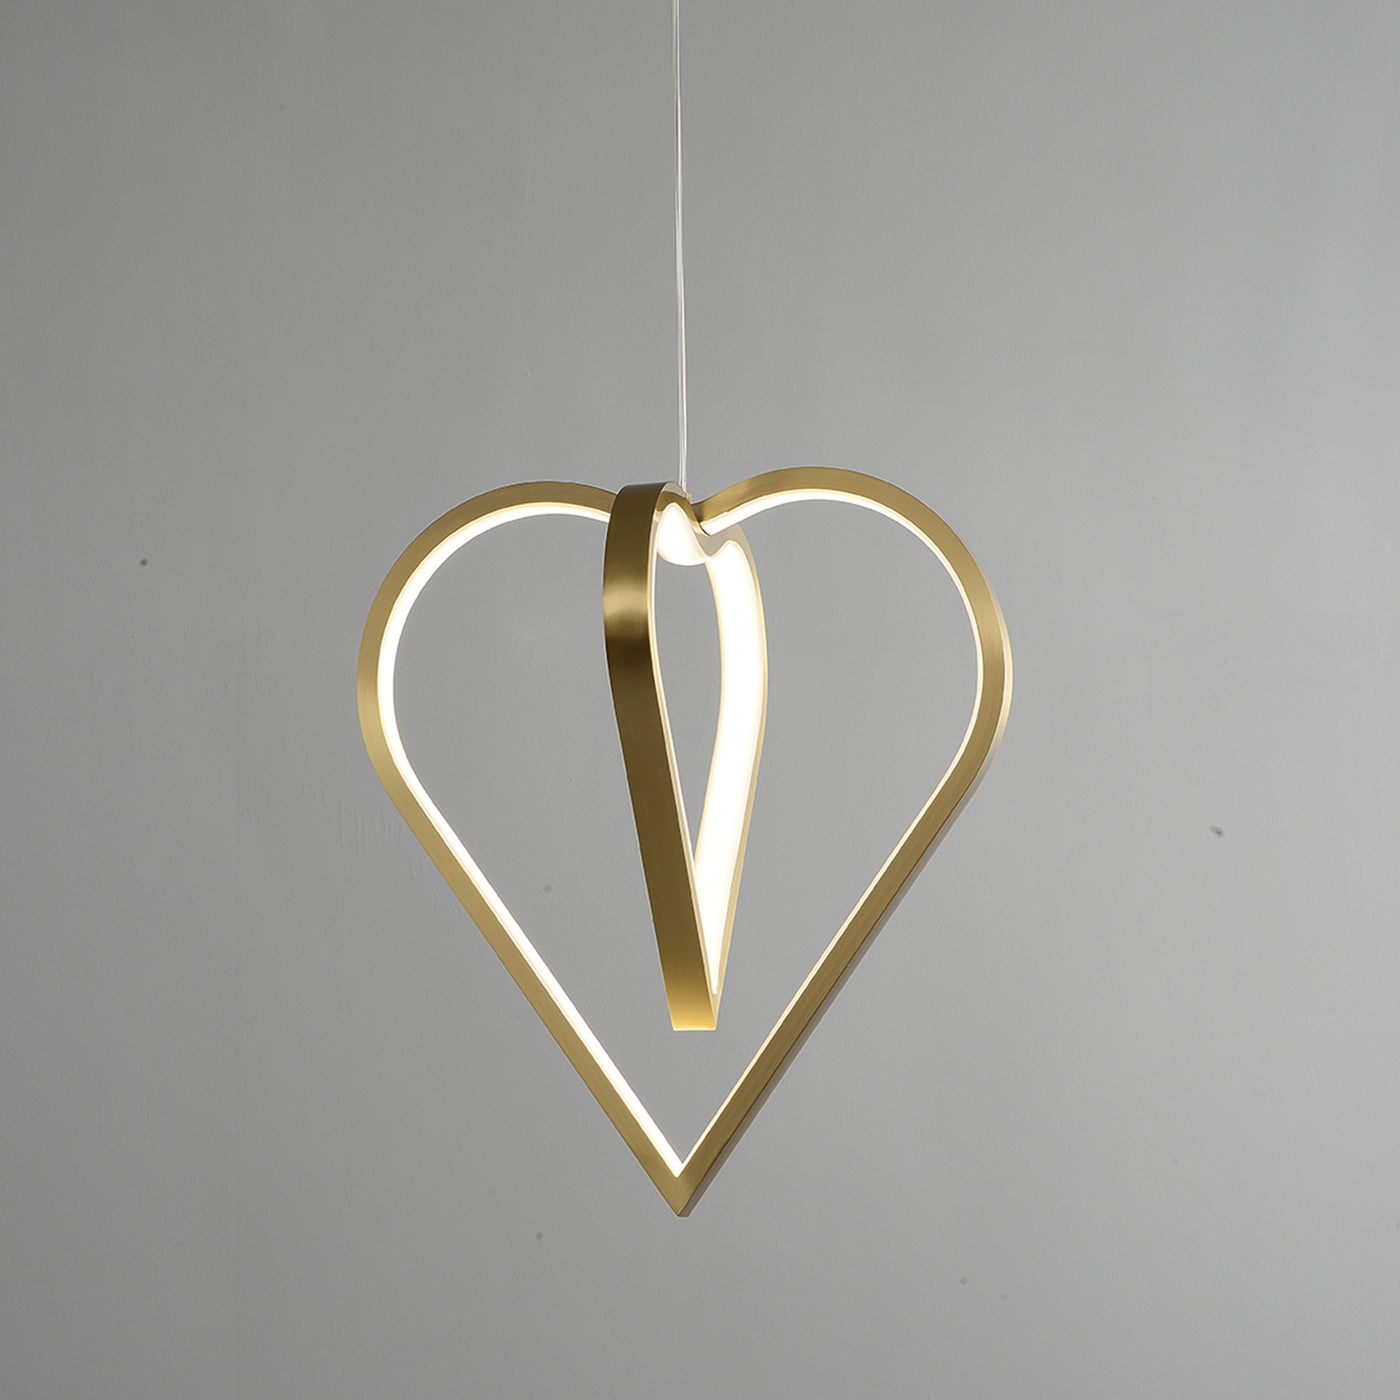 Creative heart chandelier